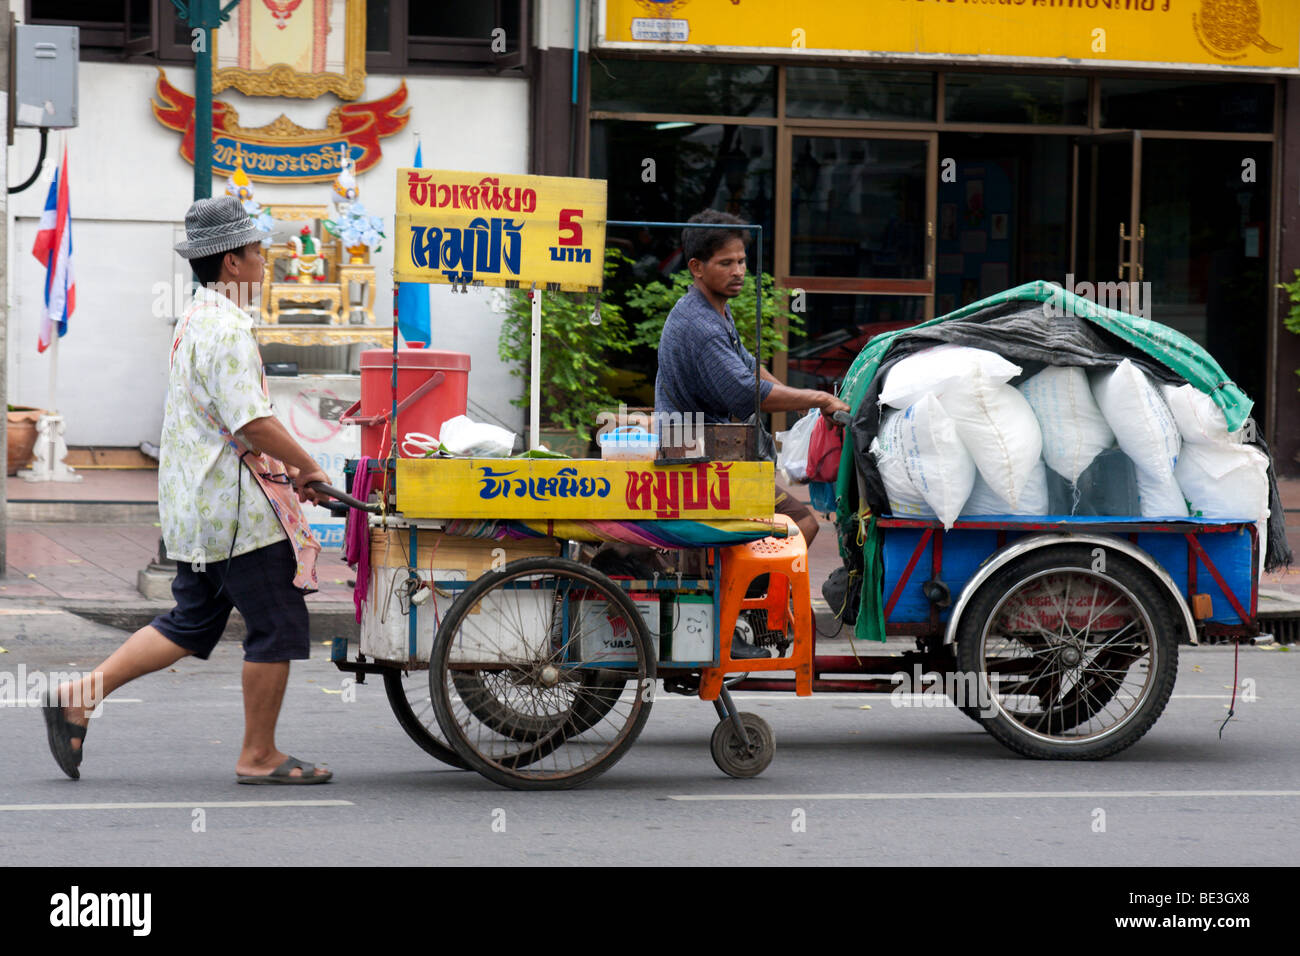 Bicycle and pushcart Bangkok Stock Photo